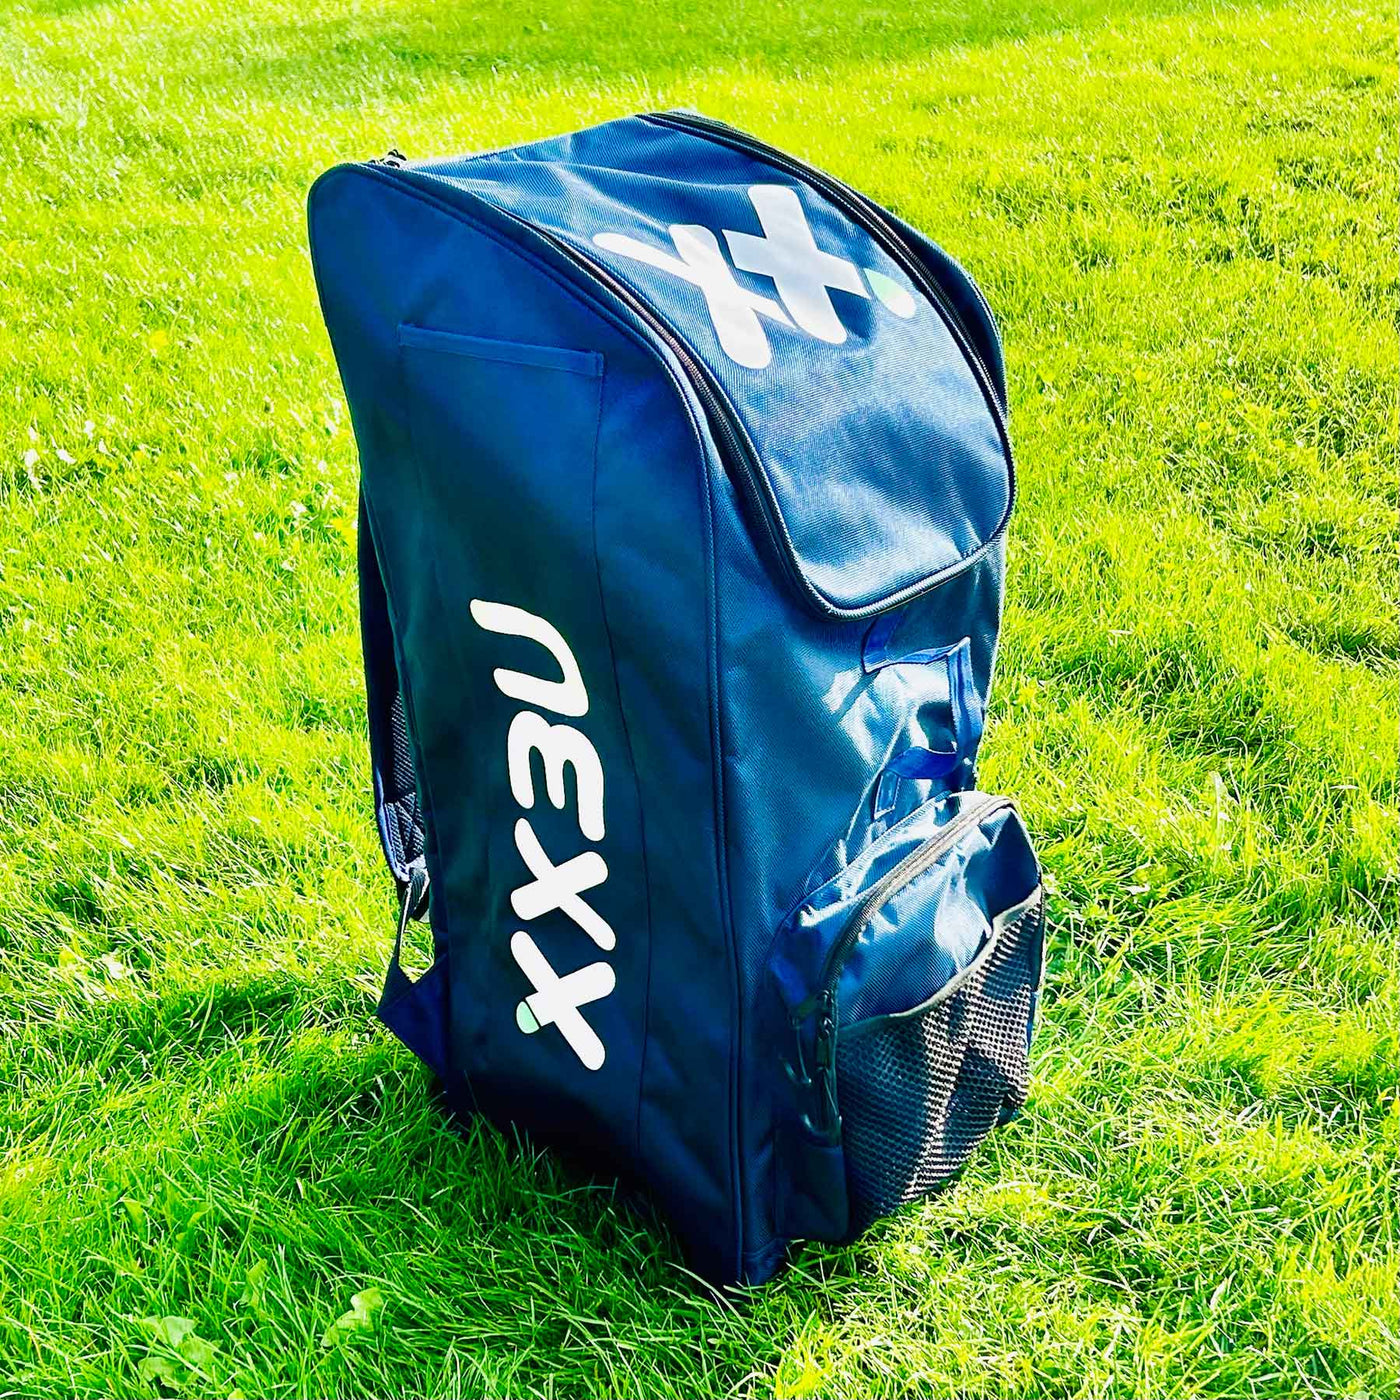 XX Duffle Cricket Bag